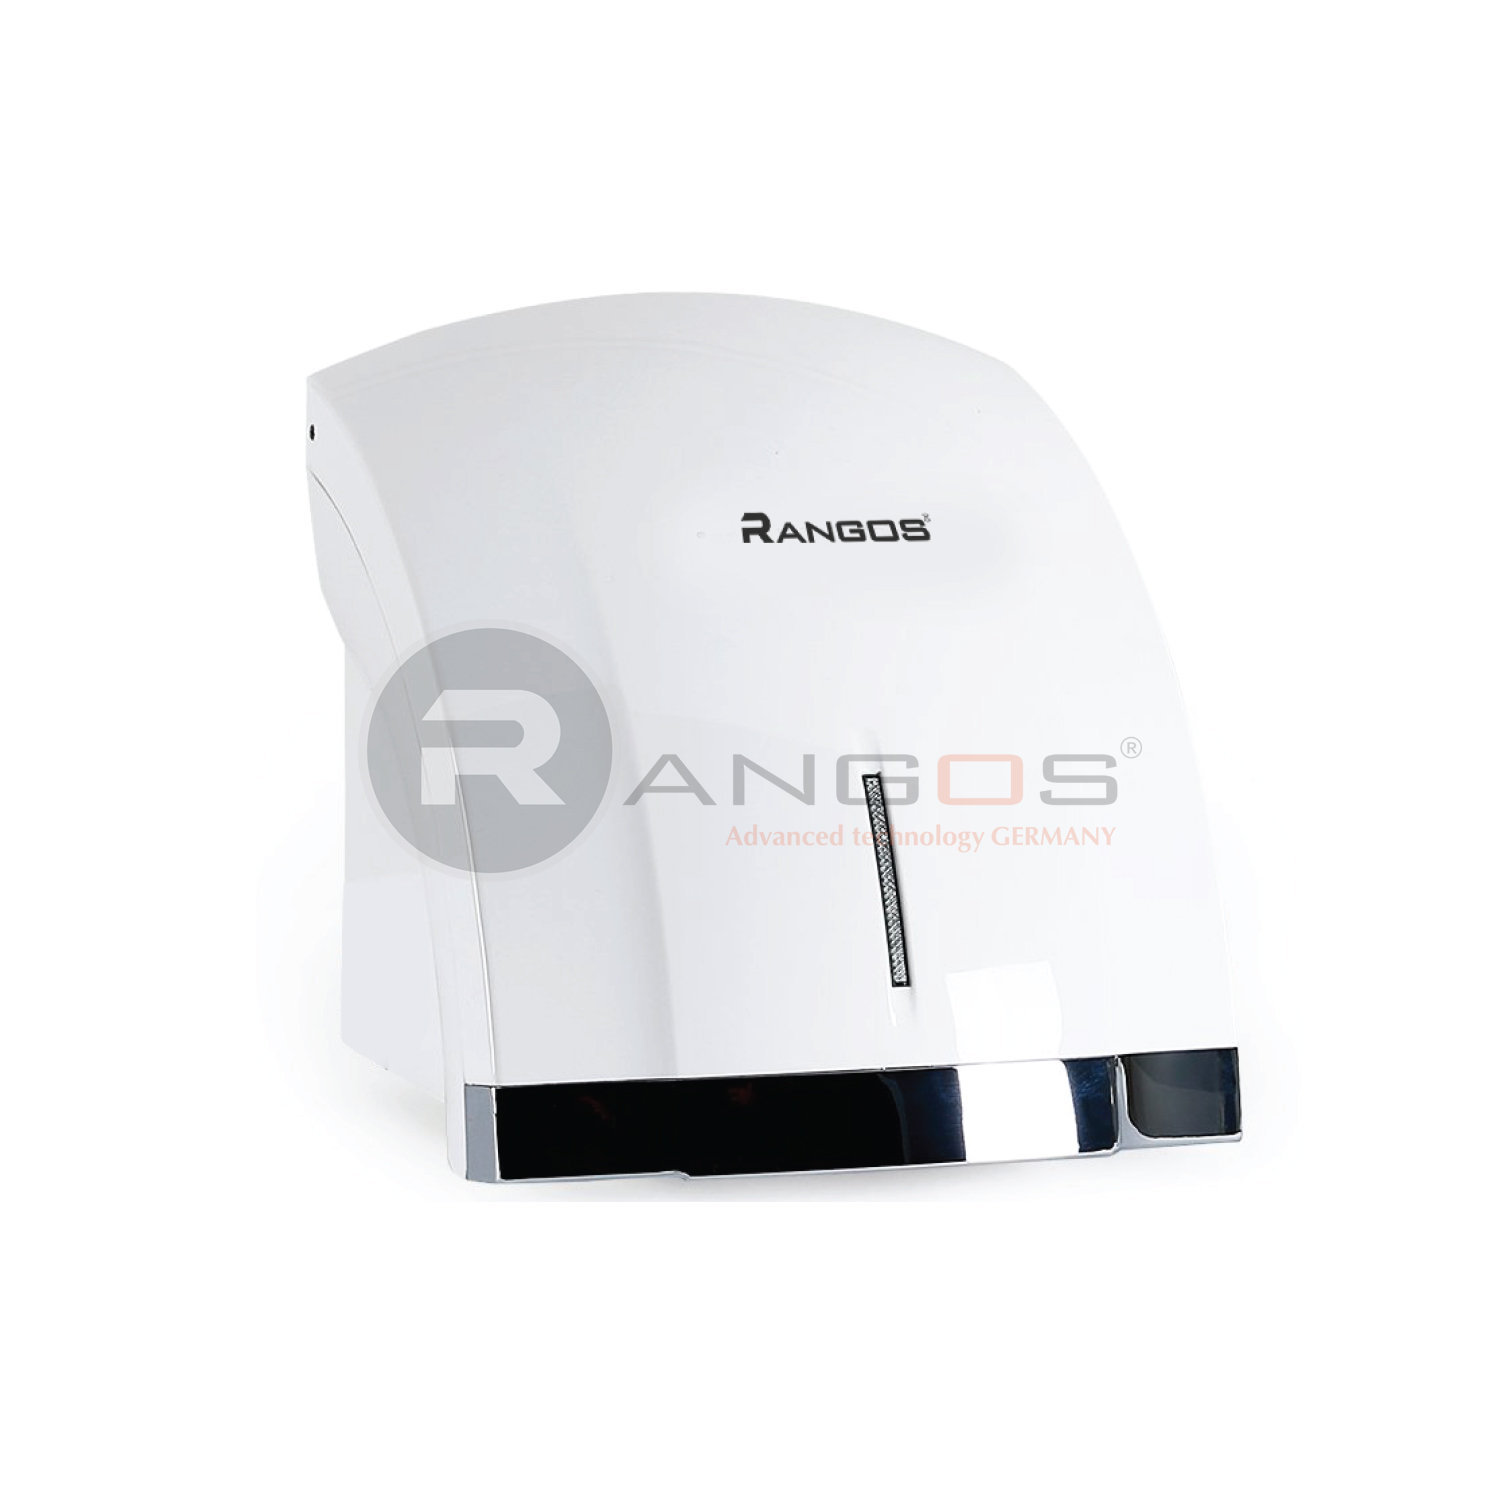 Máy sấy tay cảm ứng Rangos RG-1003